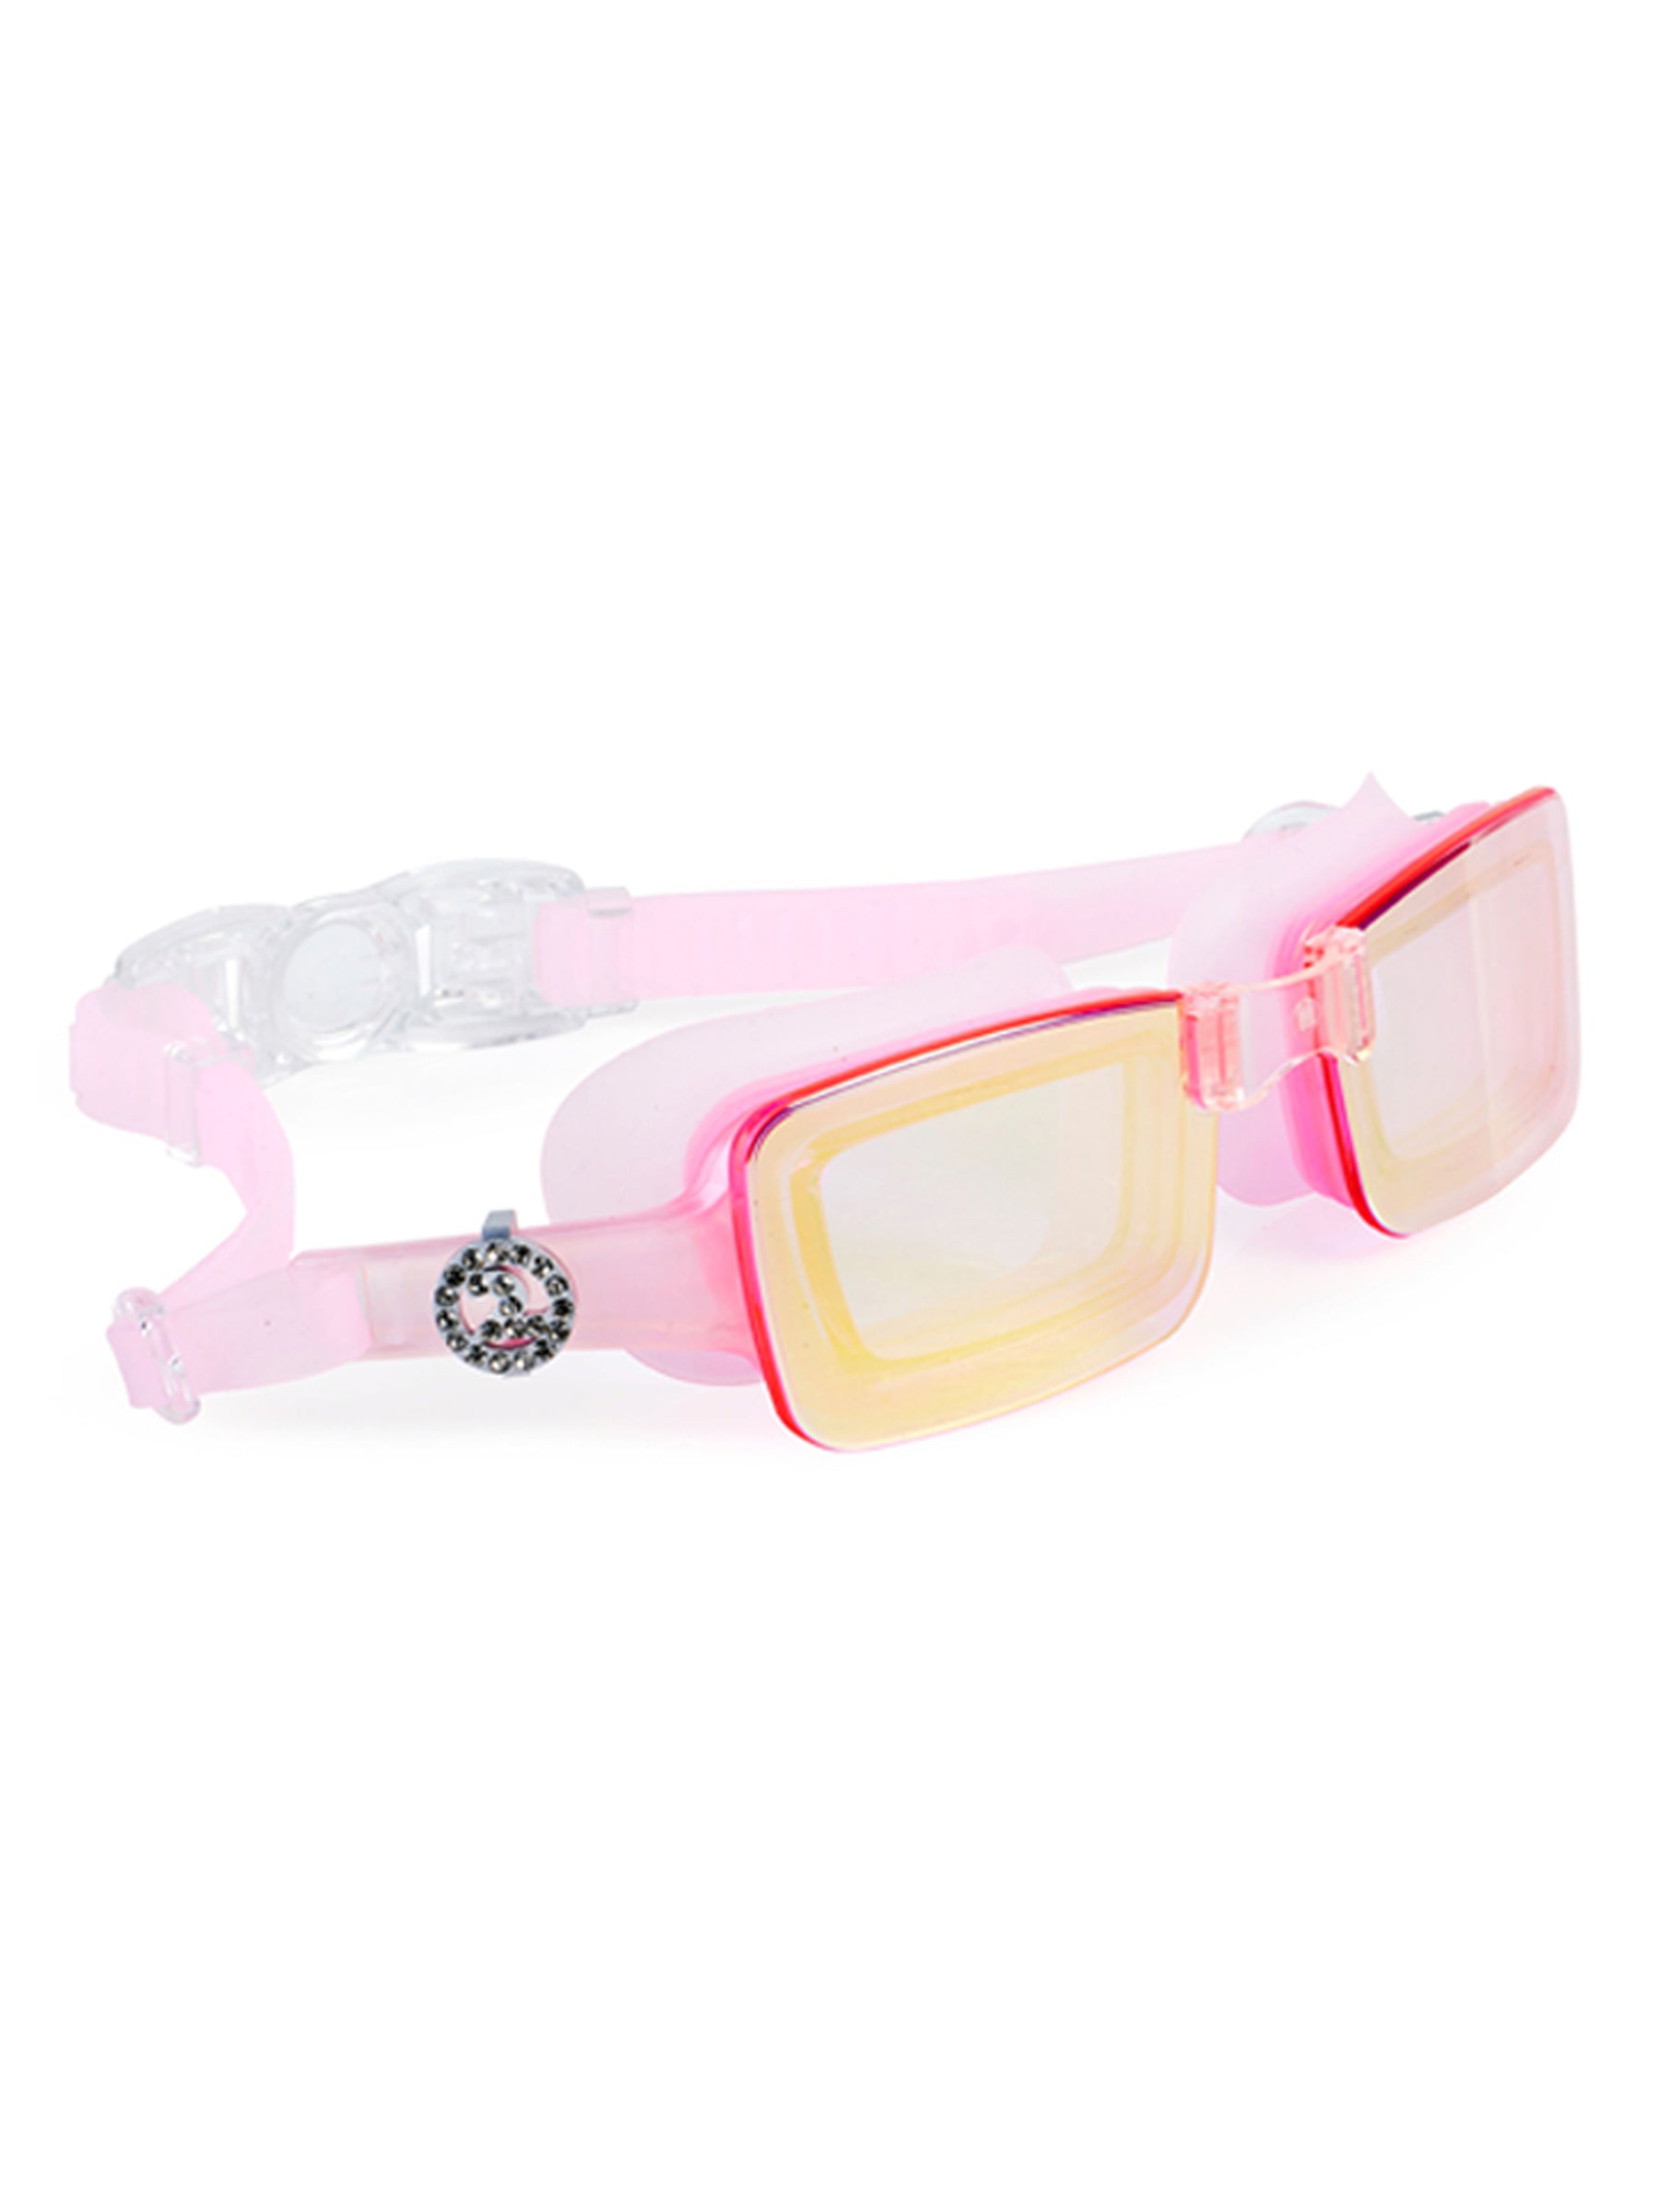 Vivacity Goggles for Girls & Women in Blush